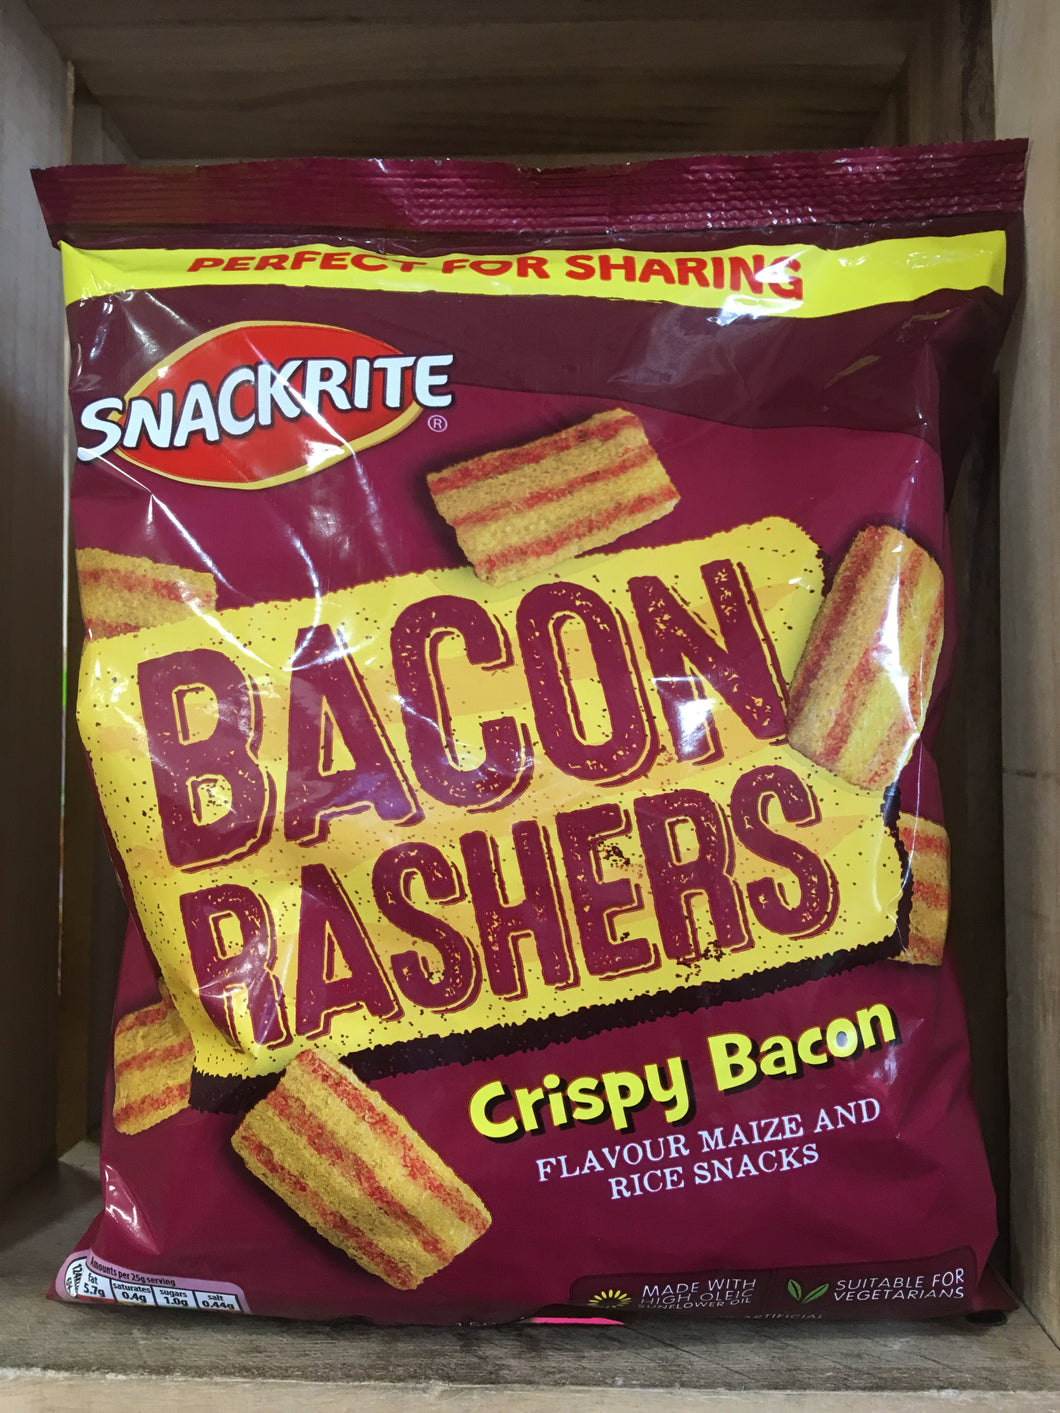 Snackrite Bacon Rashers Crispy Bacon Flavour Snacks 150g